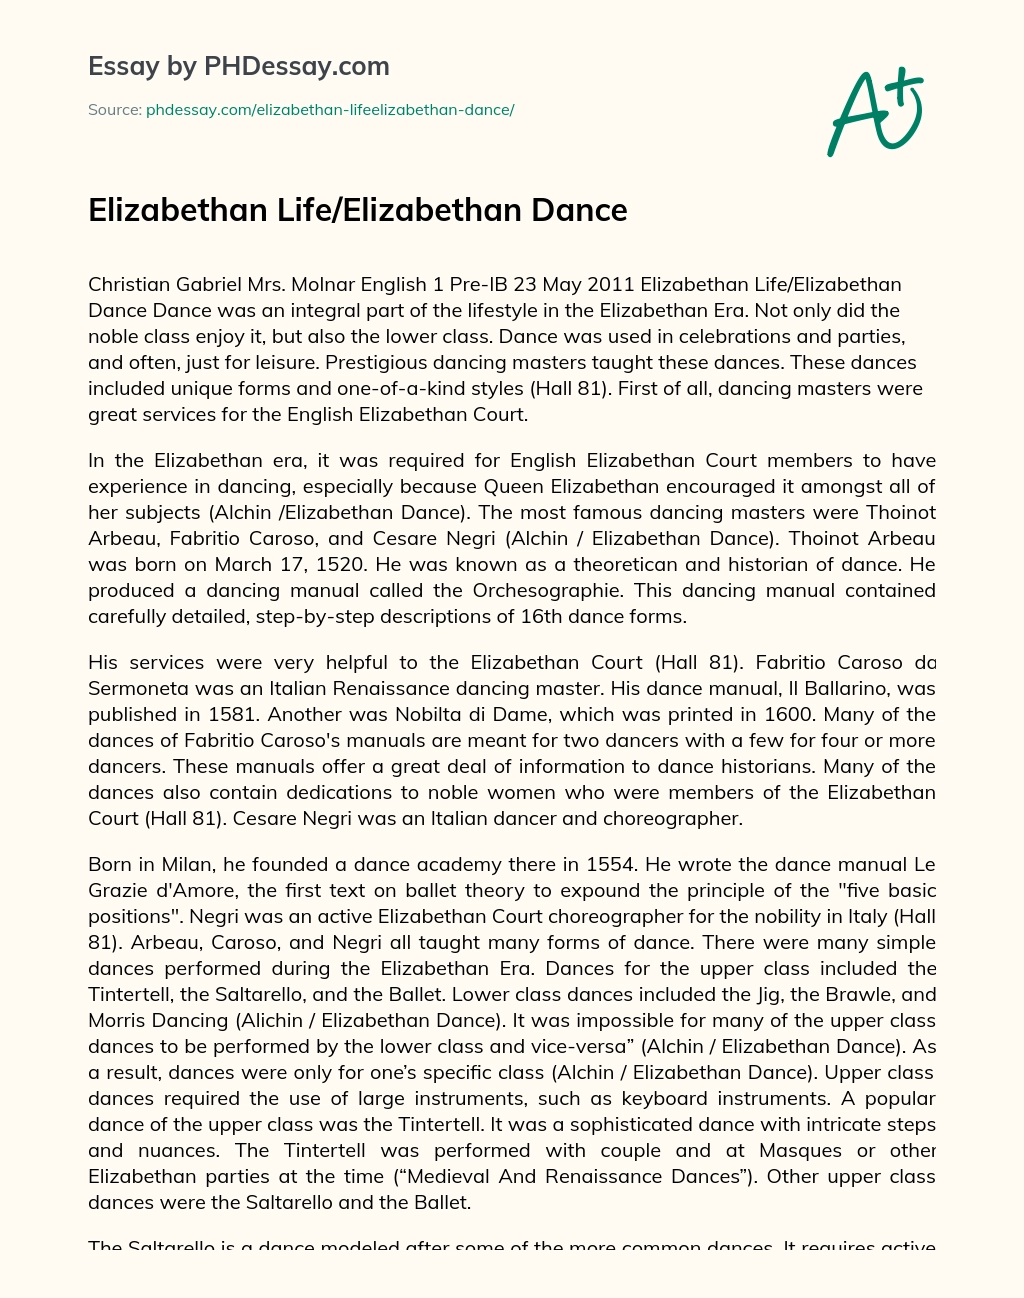 Elizabethan Life/Elizabethan Dance essay